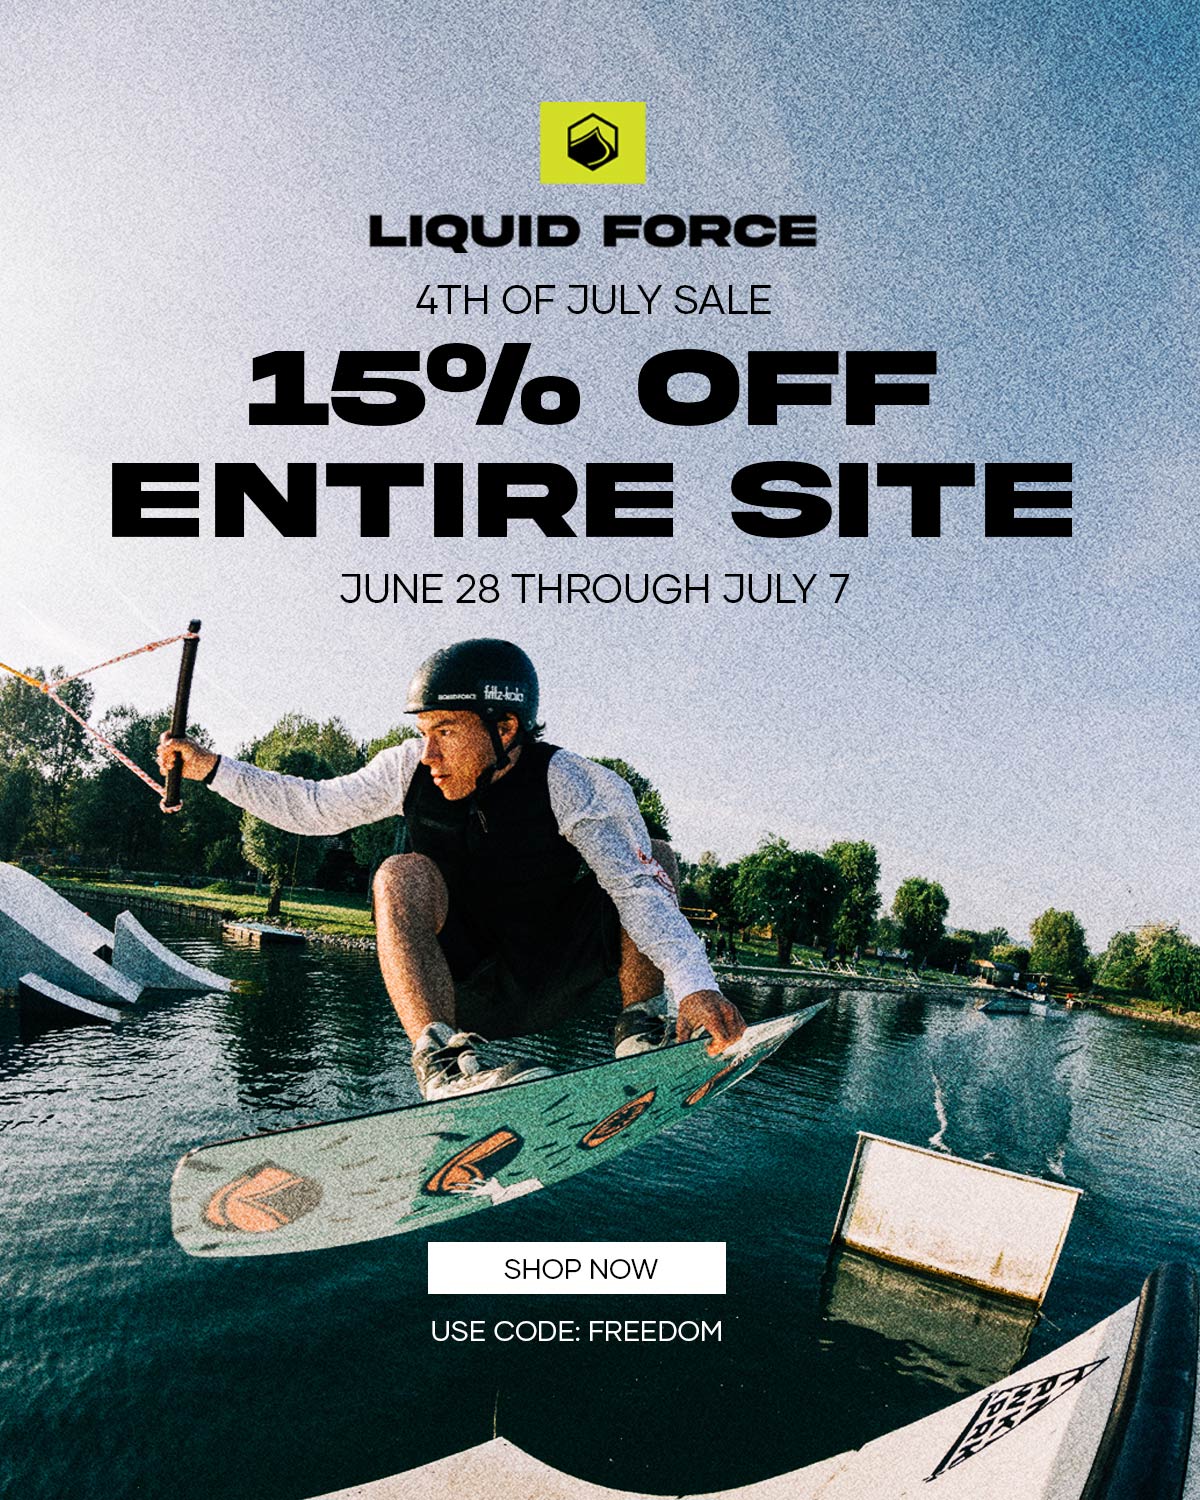 4th of July Liquid Force Sale